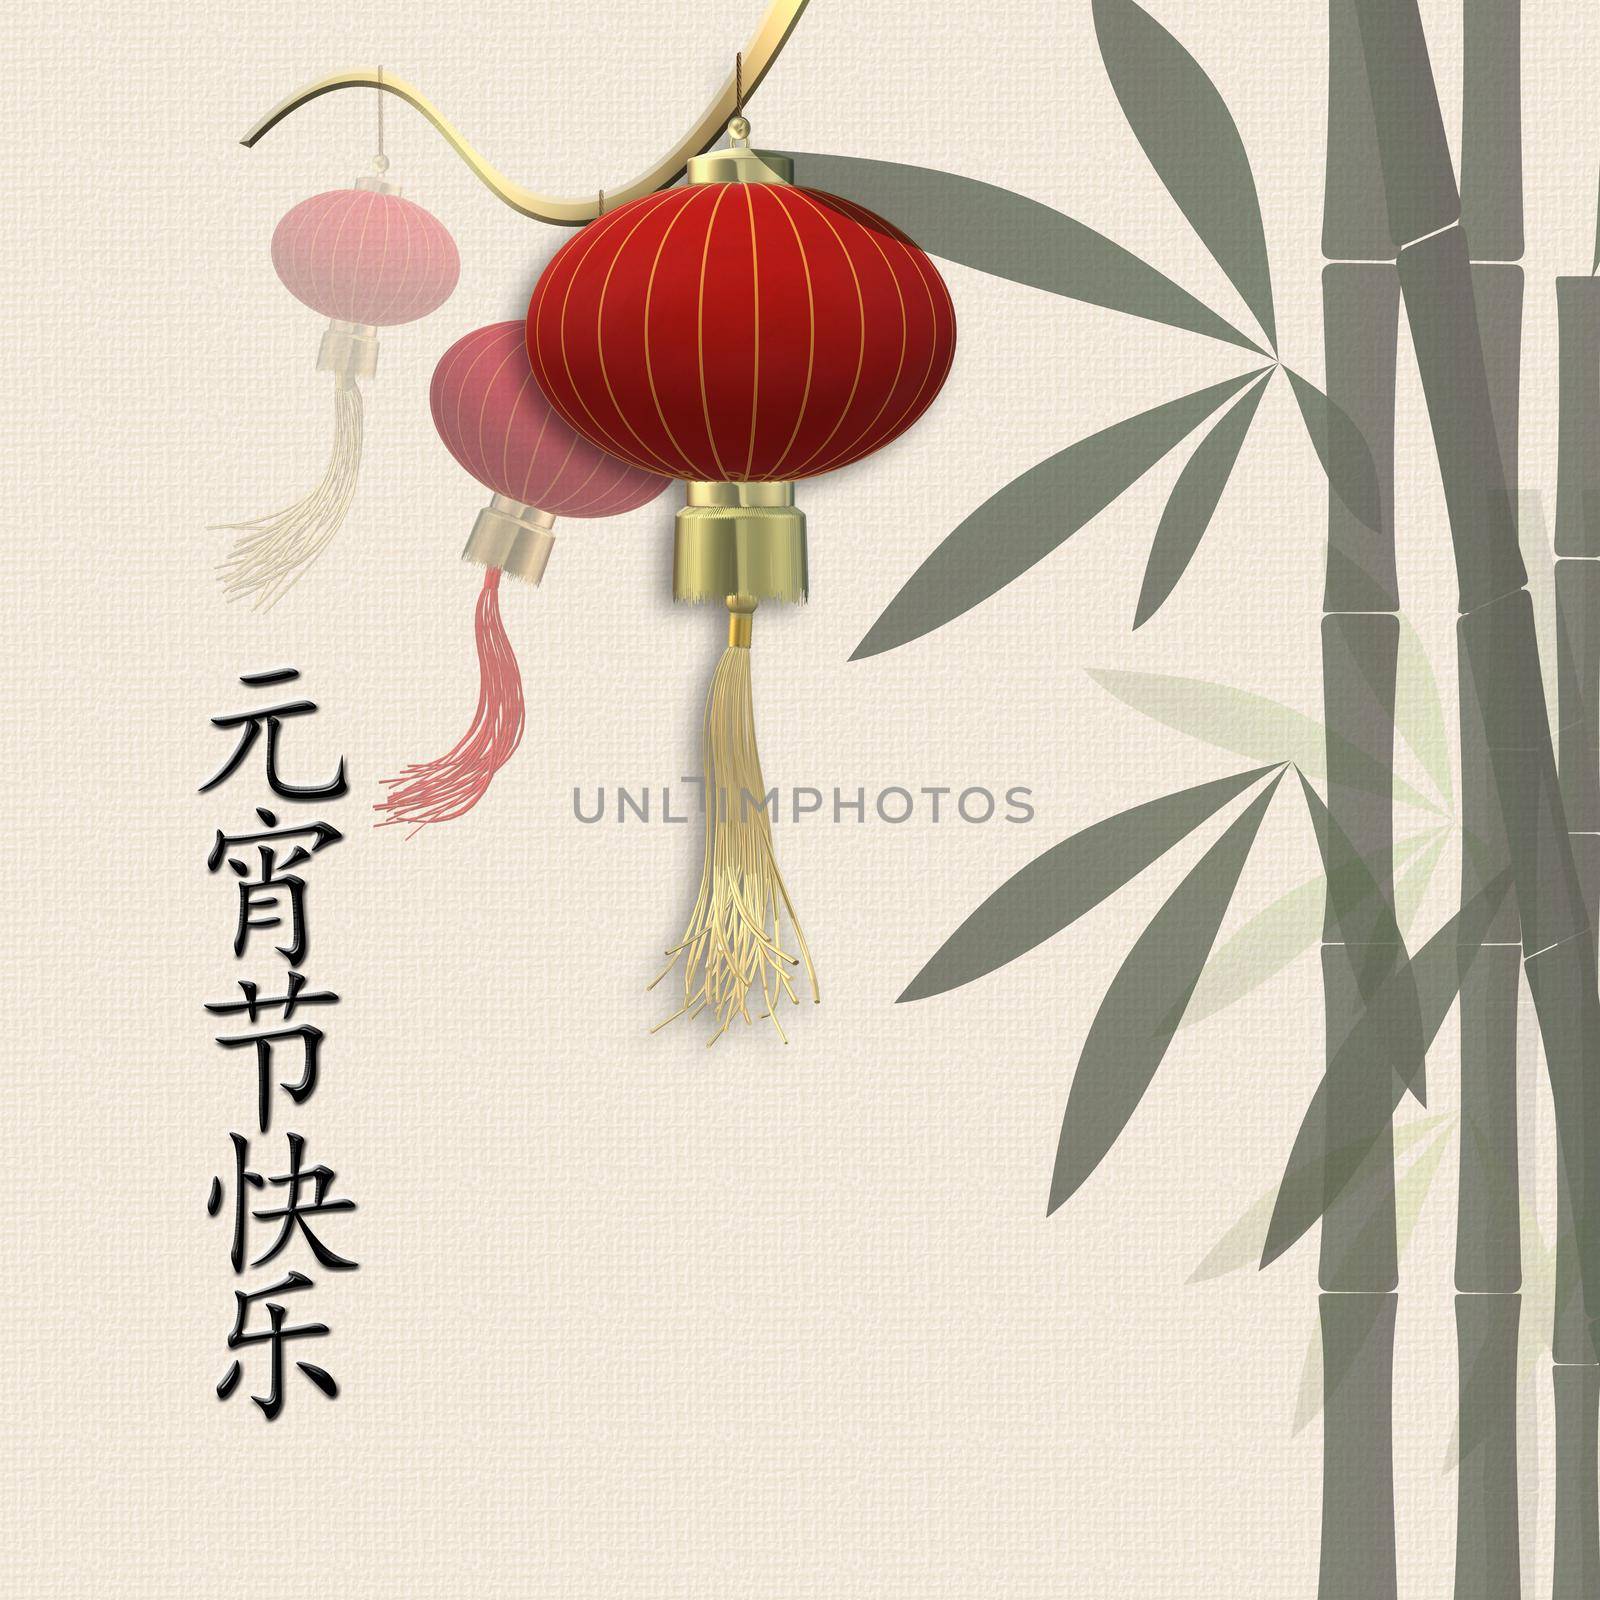 Chinese Lantern Festival by NelliPolk